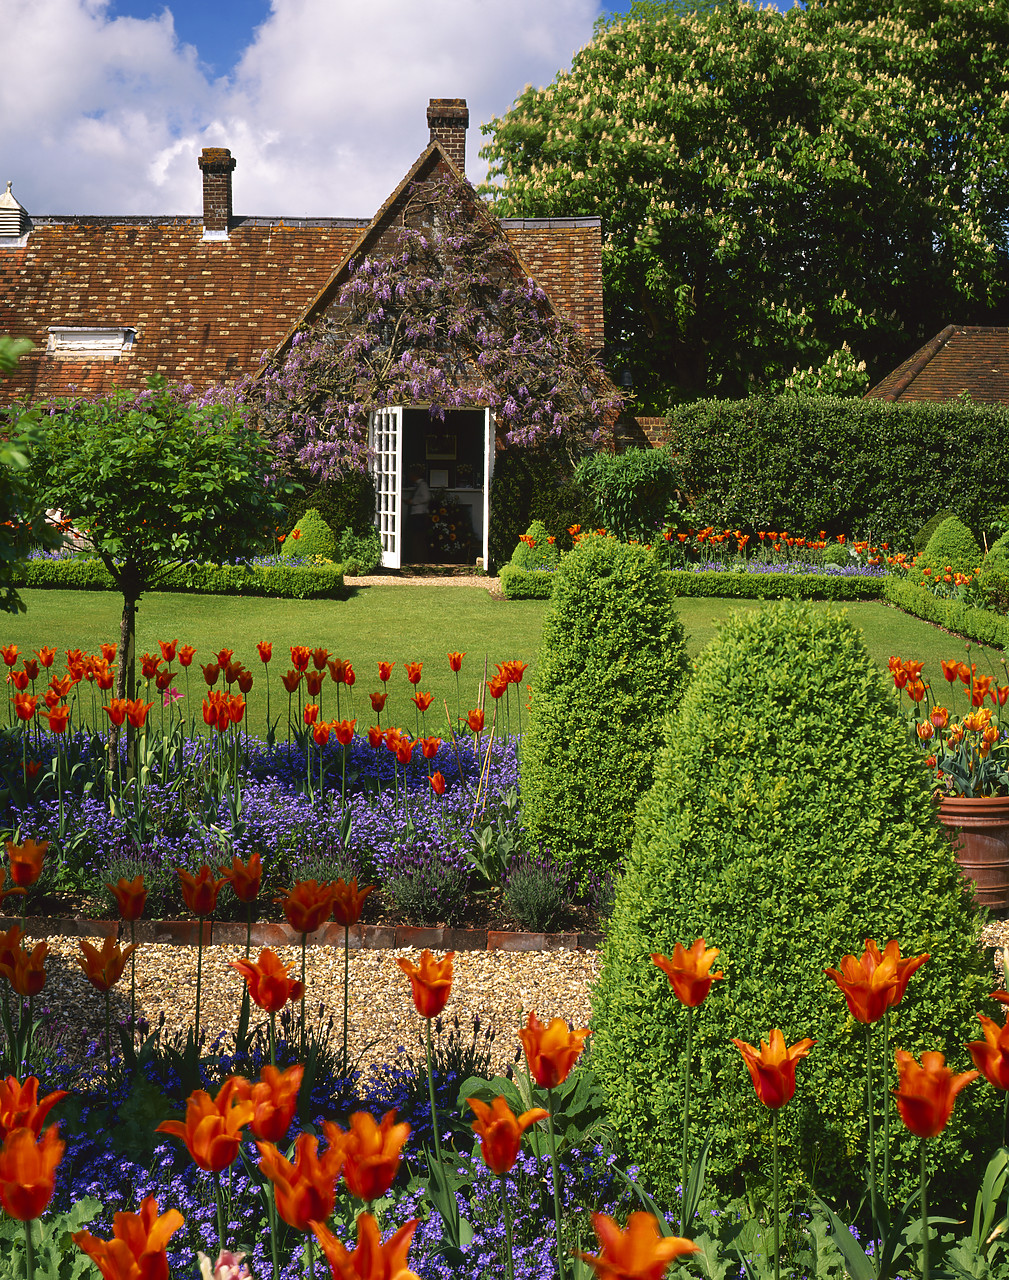 #050208-3 - Chenies Manor Garden in Spring, Chenies, Buckinghamshire, England